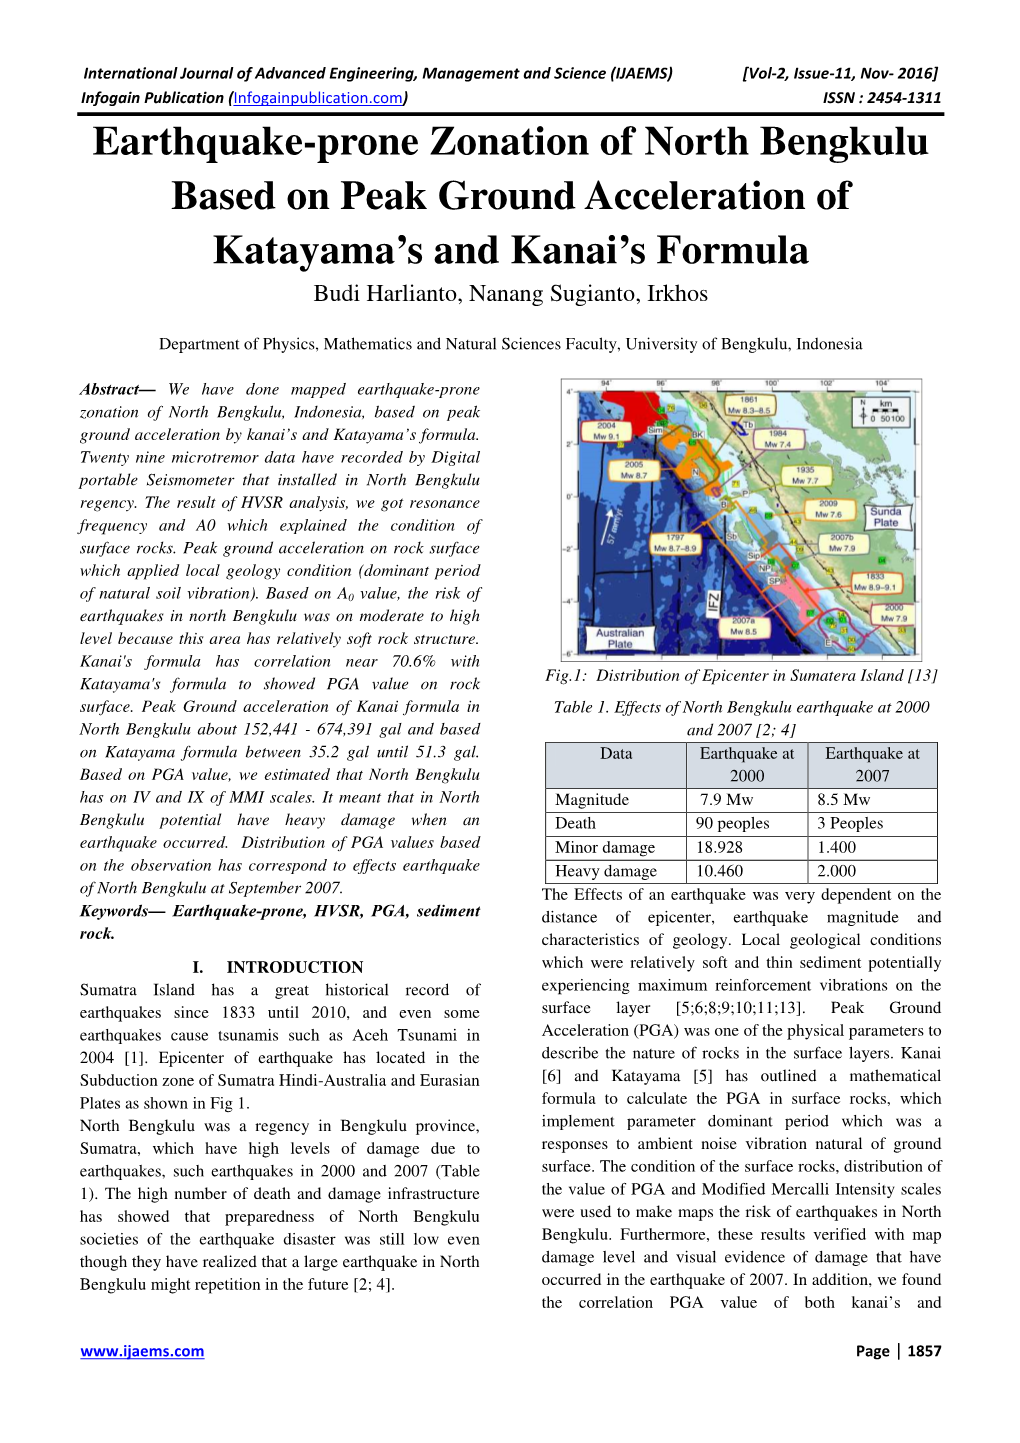 Earthquake-Prone Zonation of North Bengkulu Based on Peak Ground Acceleration of Katayama’S and Kanai’S Formula Budi Harlianto, Nanang Sugianto, Irkhos